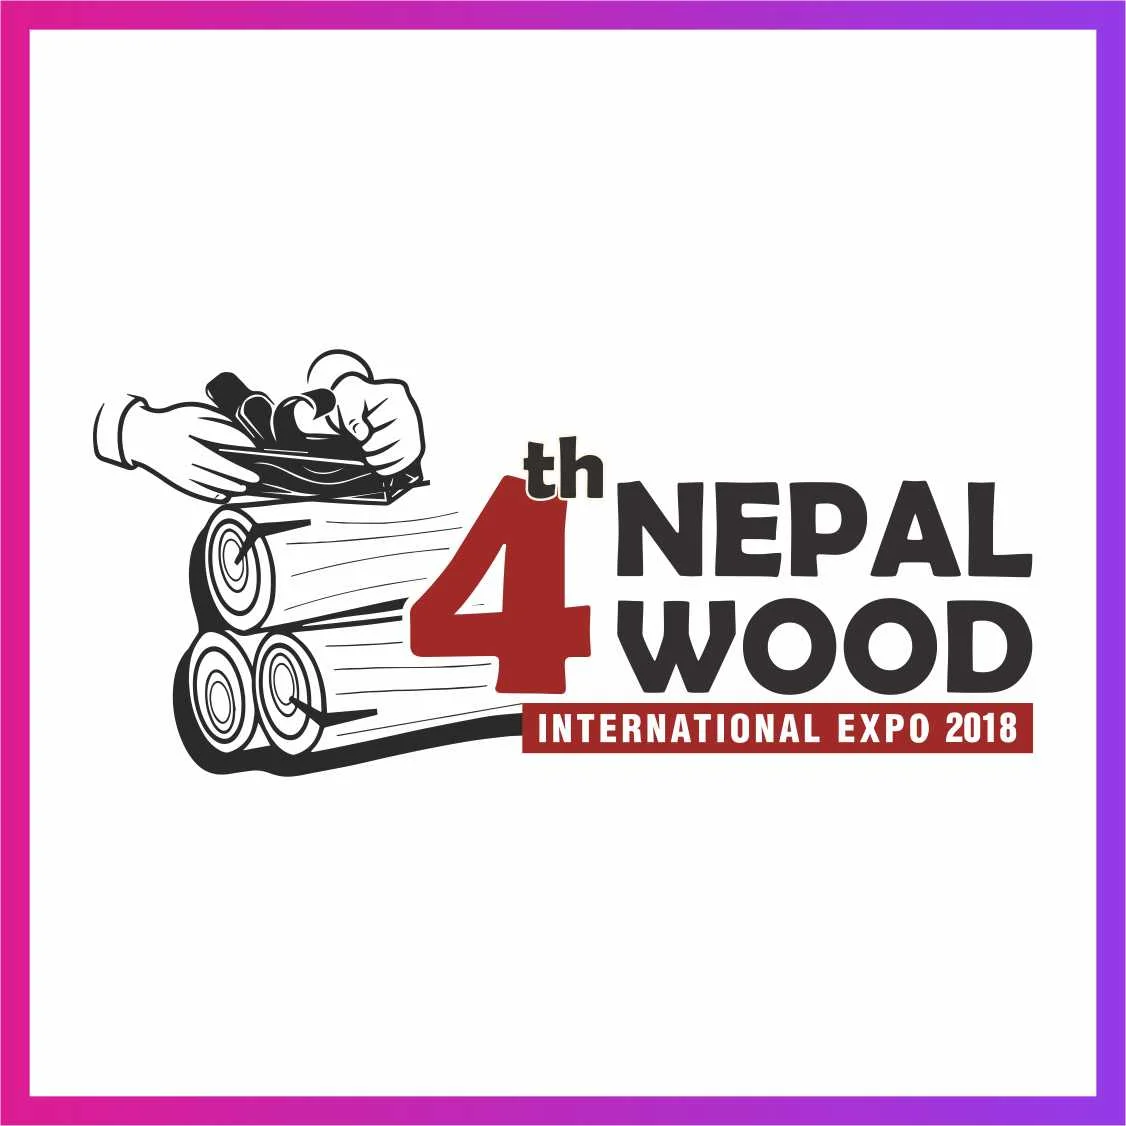 Nepal Wood International Expo 2018